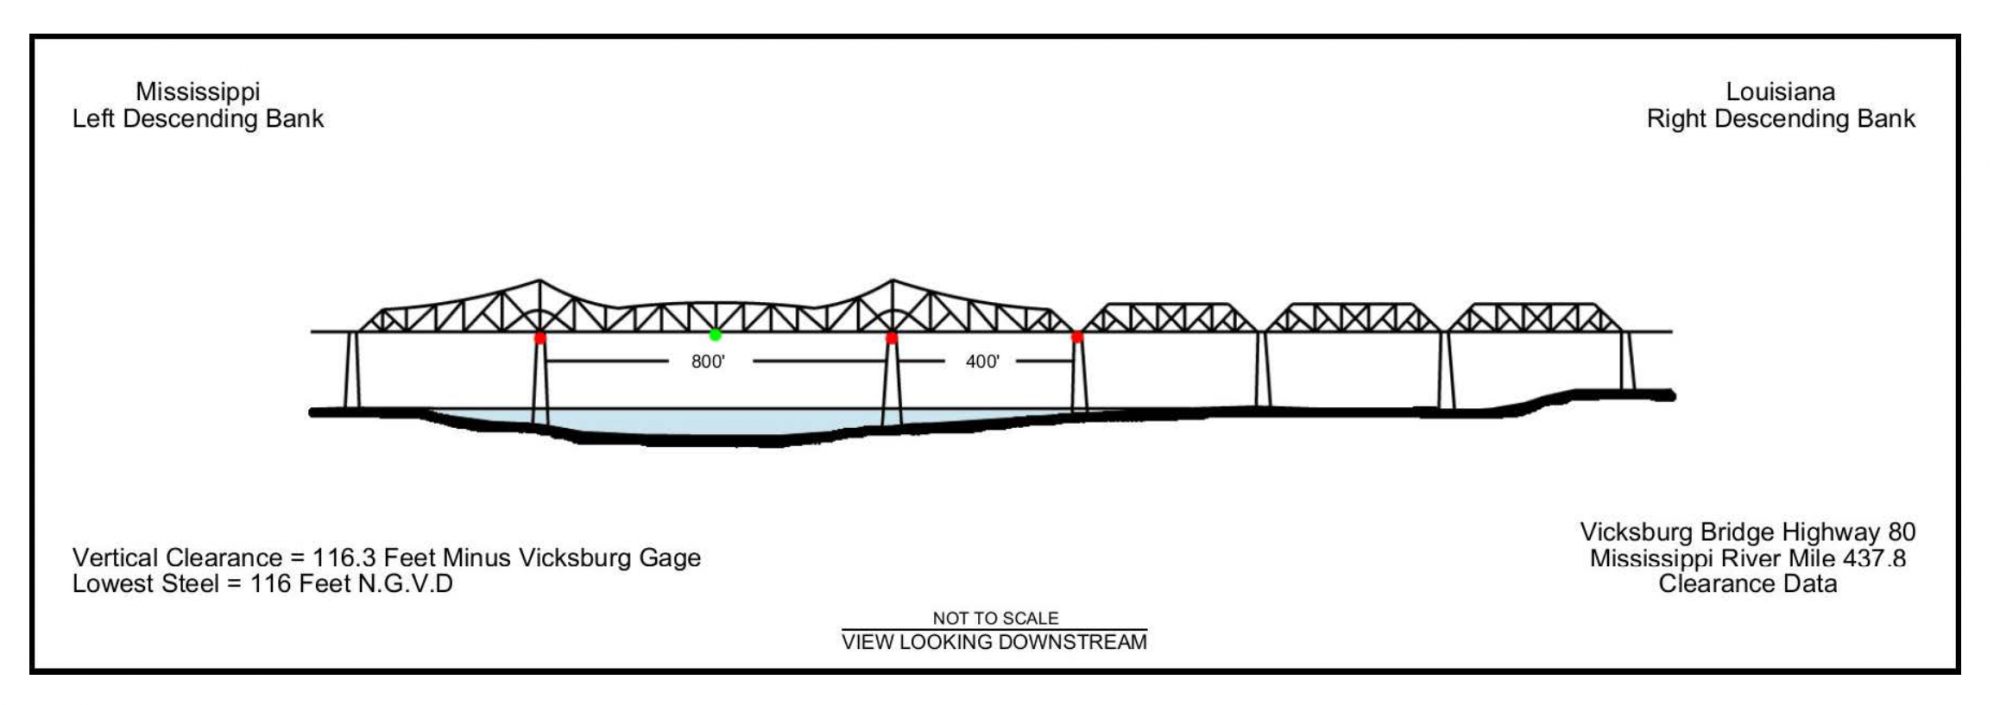 Vicksburg Railway and Hwy Bridge Clearances | Bridge Calculator LLC